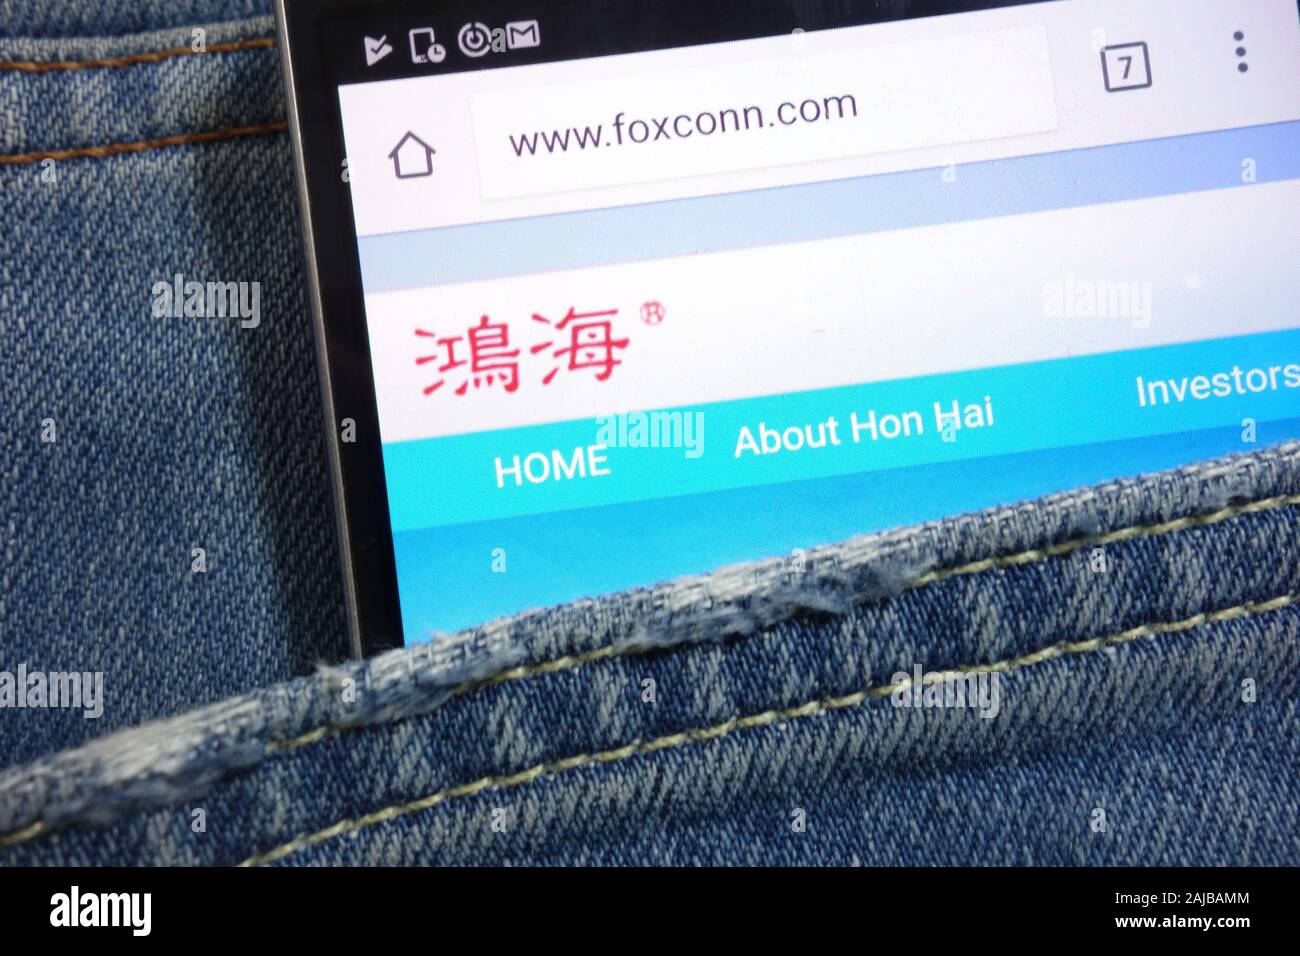 Foxconn website displayed on smartphone hidden in jeans pocket Stock Photo